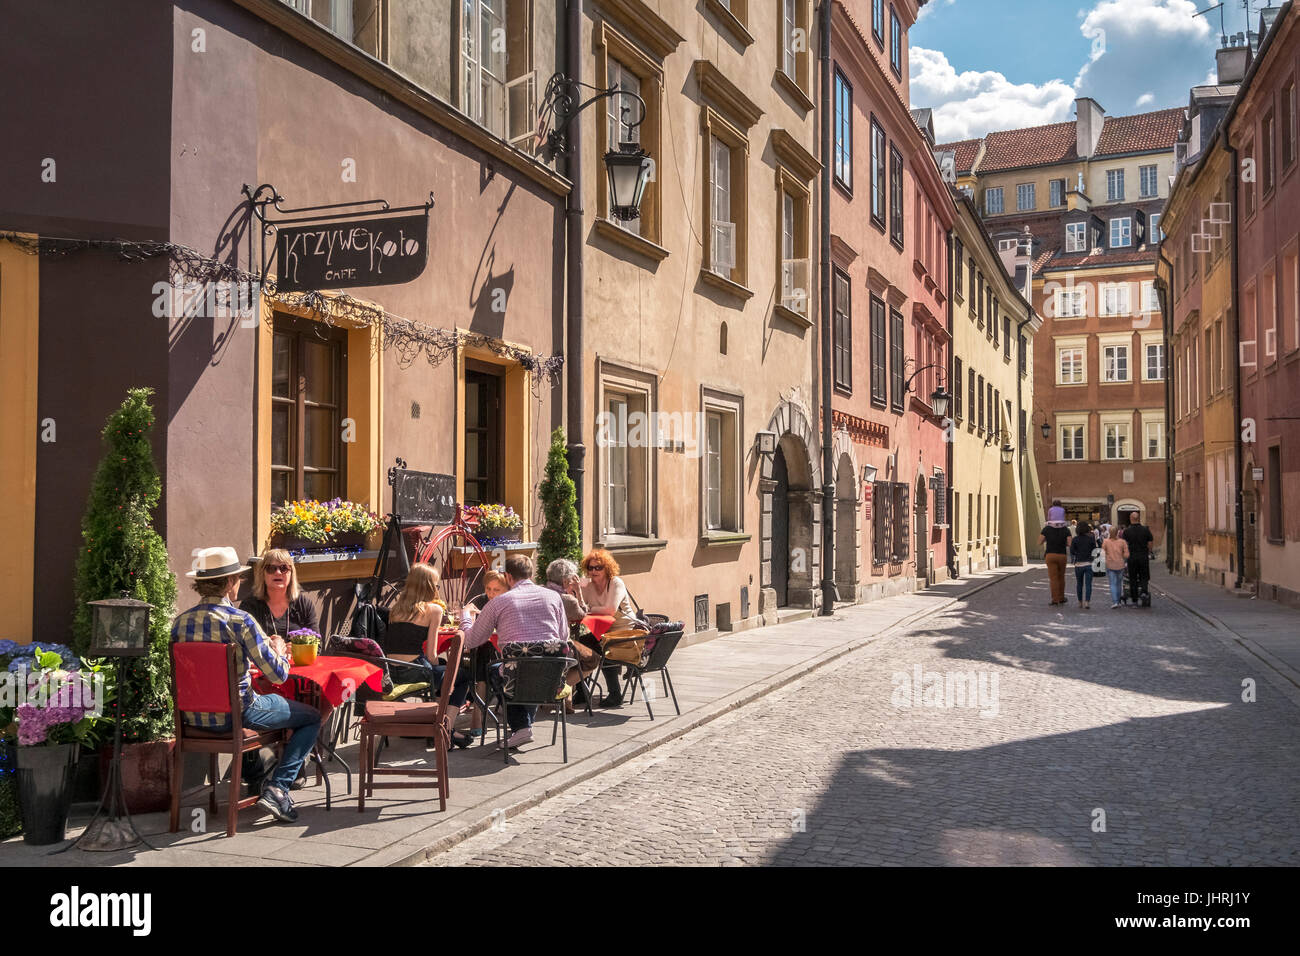 Tourists sitting in sunshine outside Krzywe Kolo Cafe, Old Town, Warsaw, Poland Stock Photo